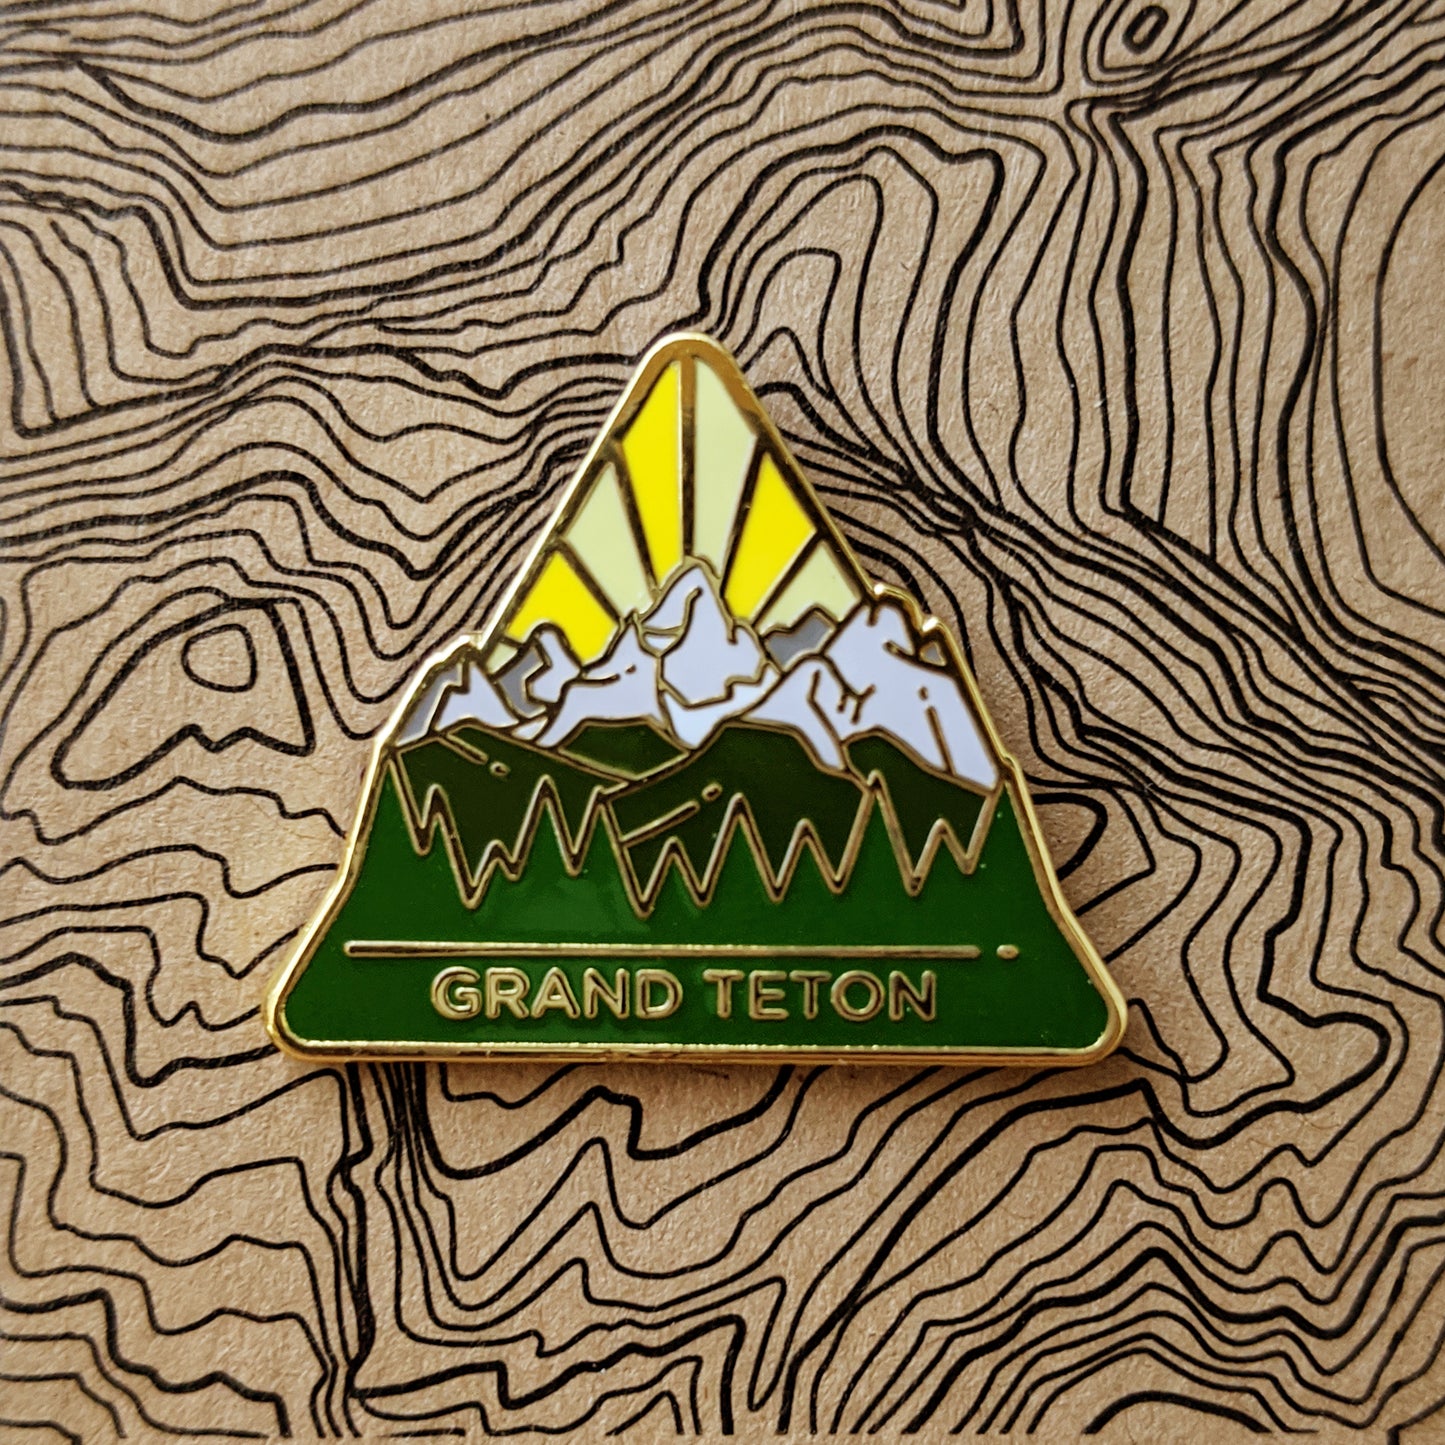 Triangle Grand Teton national park enamel pin featuring a view of the teton range.